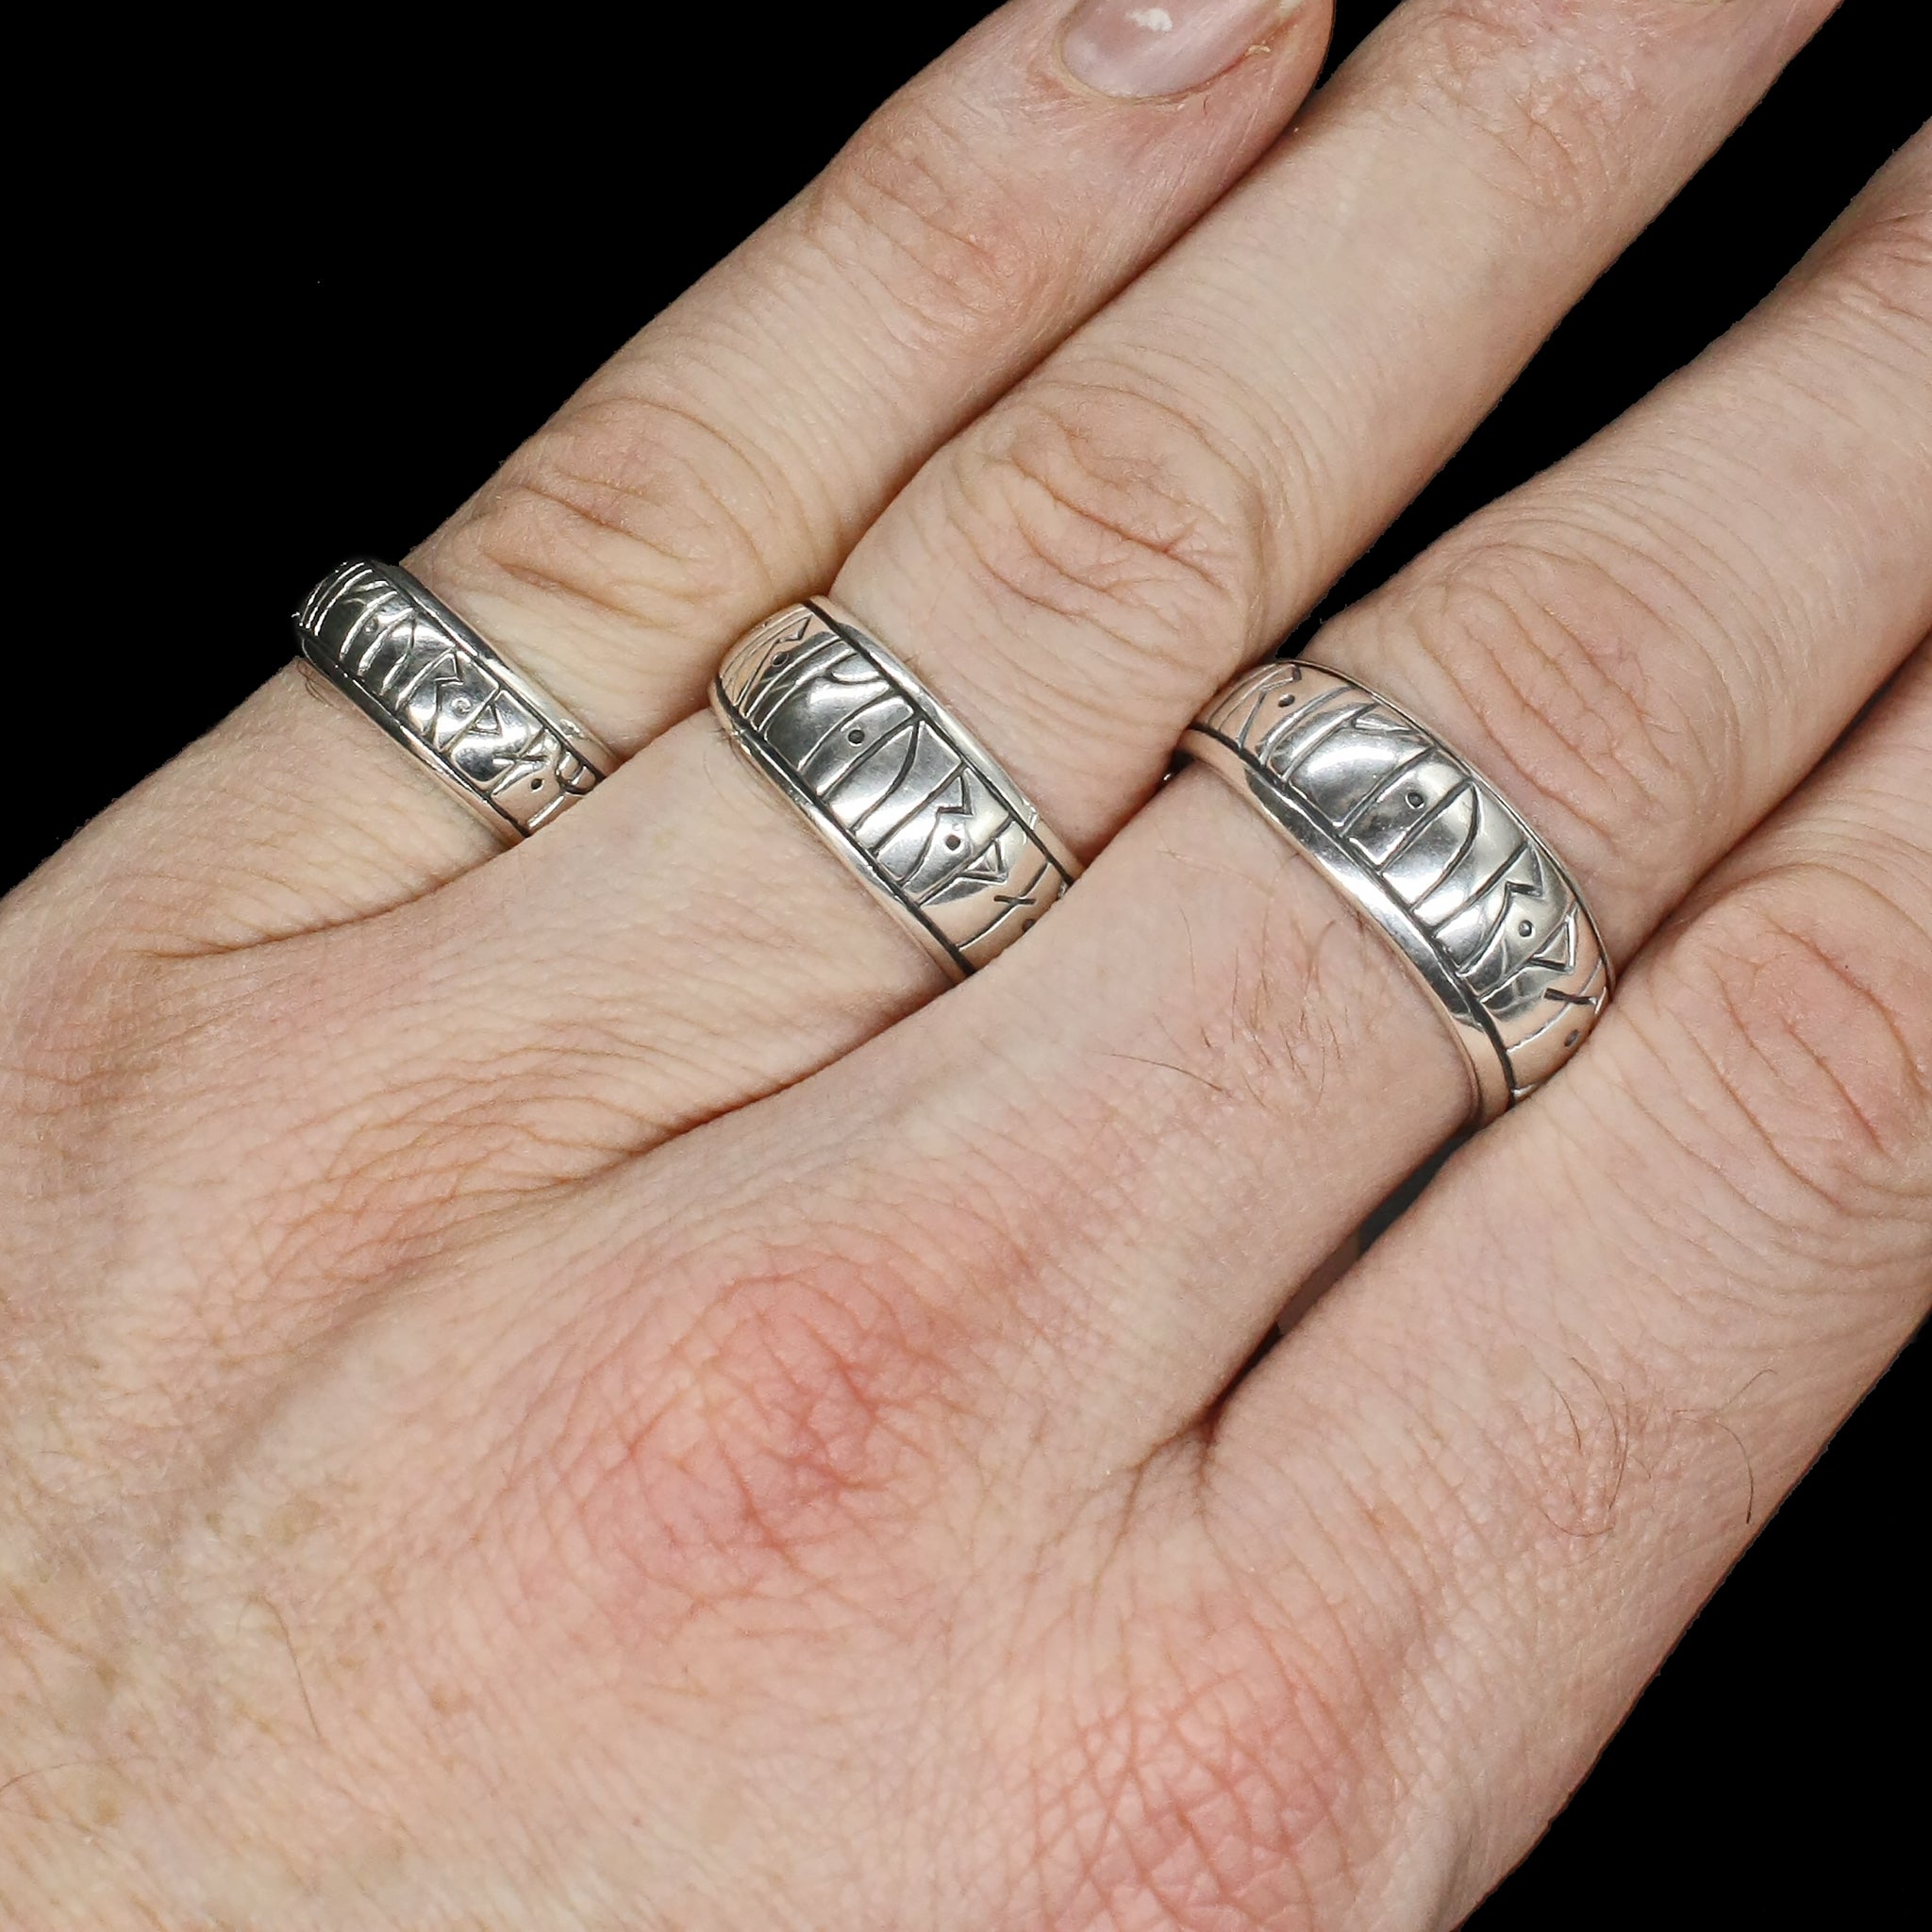 Silver Viking Strength Rune Rings on Hand